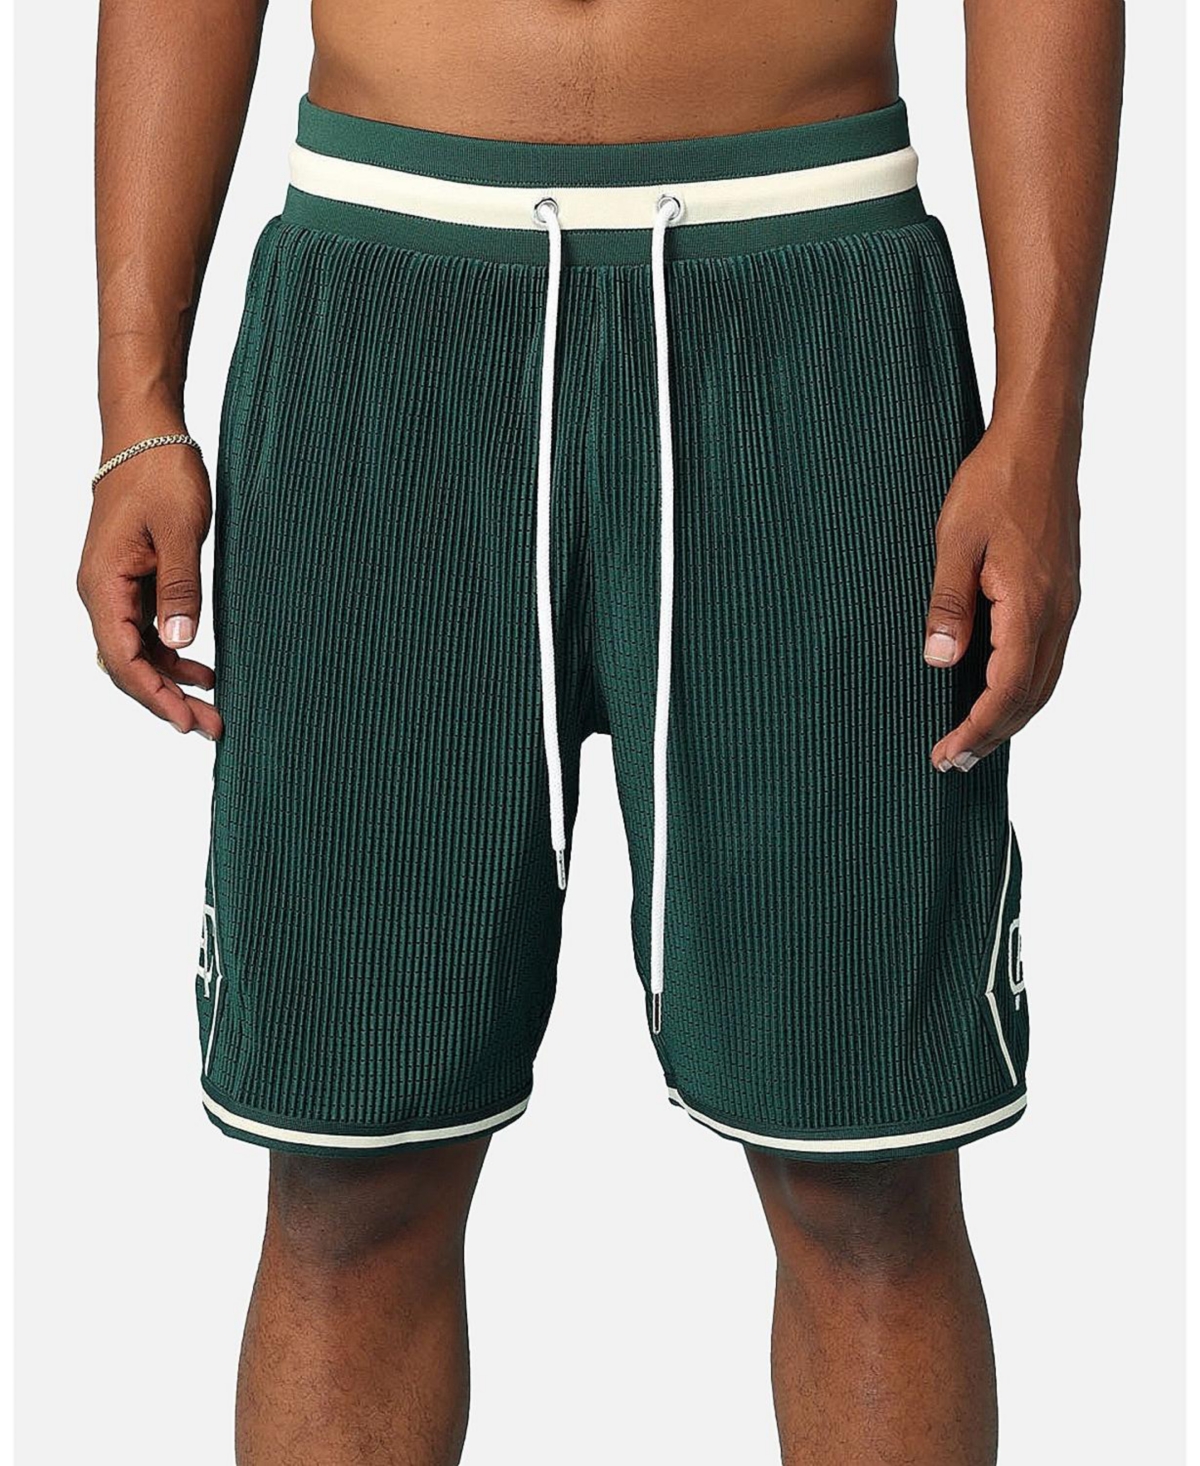 Men's Fold Ball Shorts - XXXLarge - Green